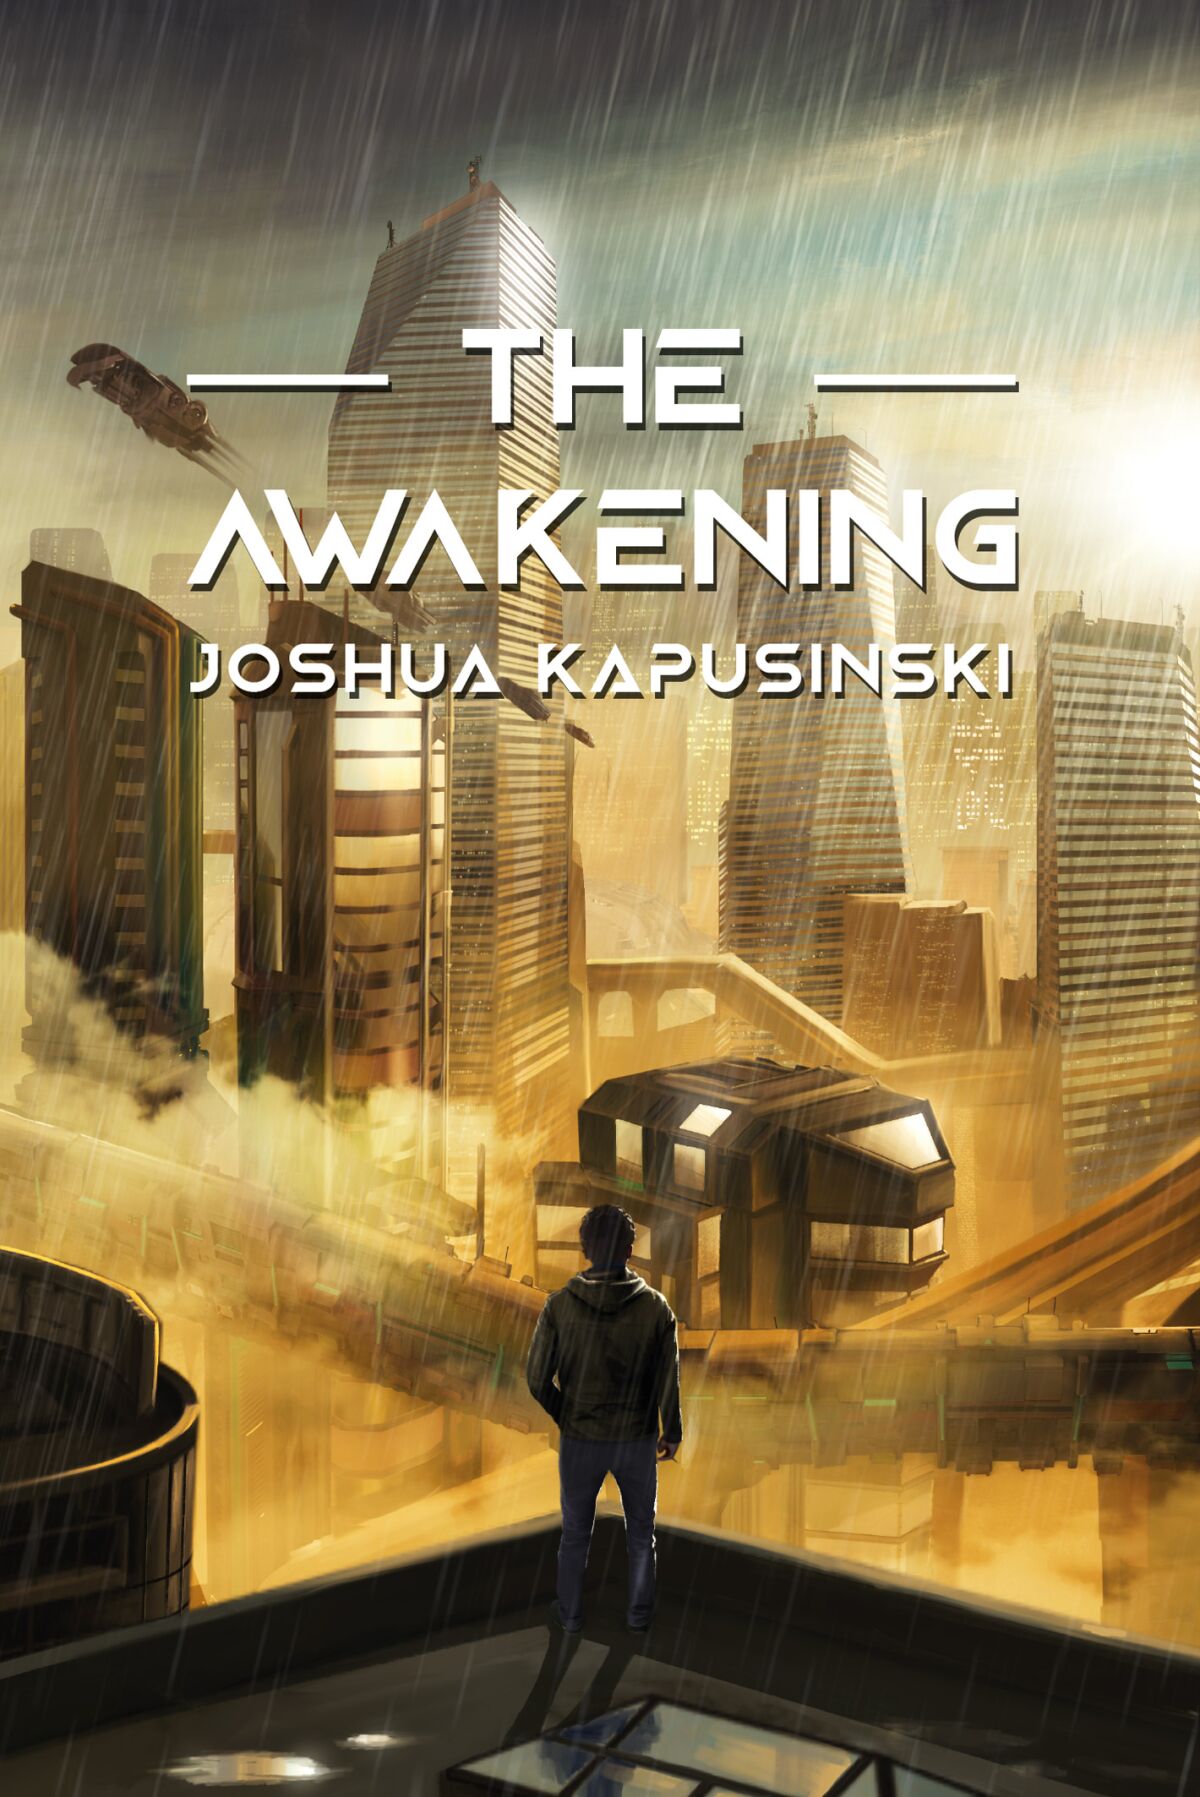 The cover of "The Awakening" by Joshua Kapusinski